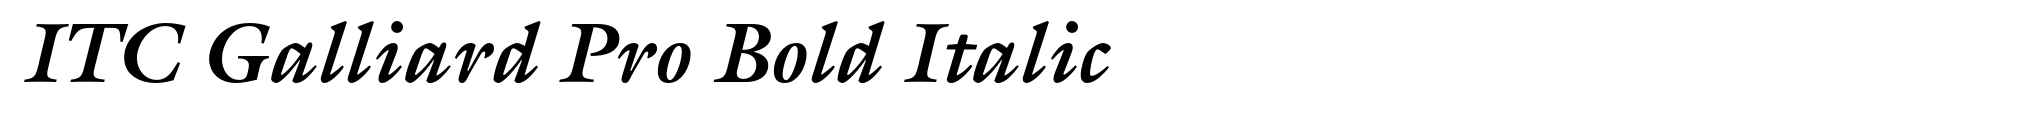 ITC Galliard Pro Bold Italic image